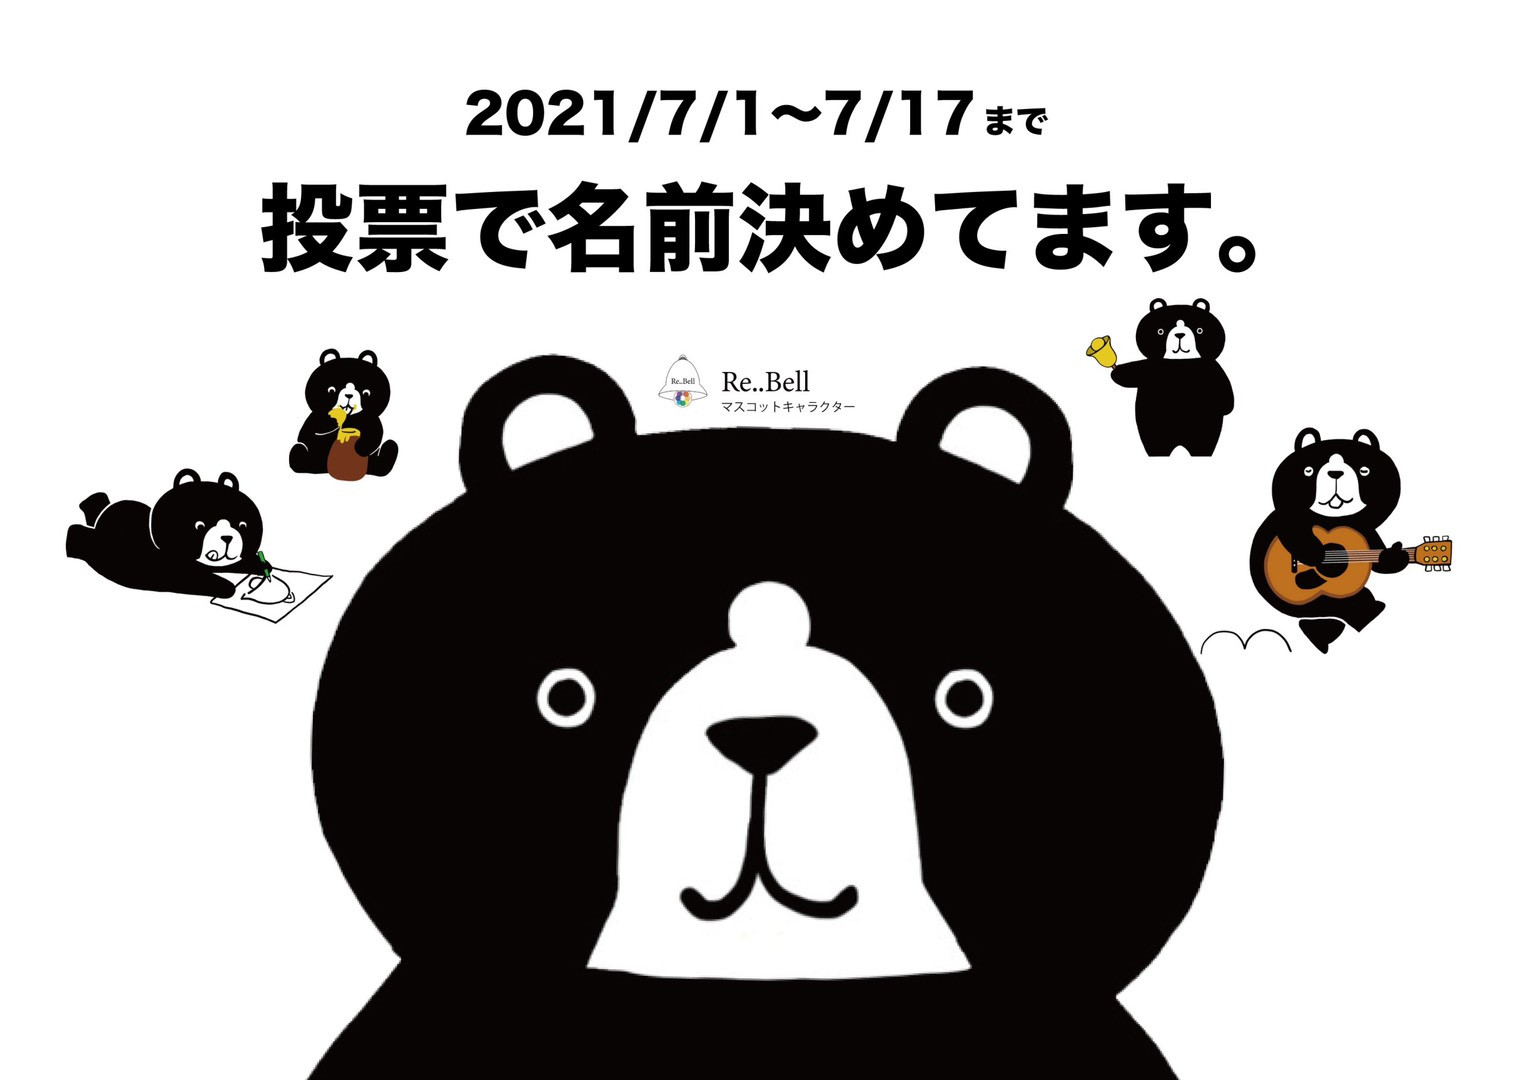 Re..Bell マスコットキャラクターお名前総選挙開催!!